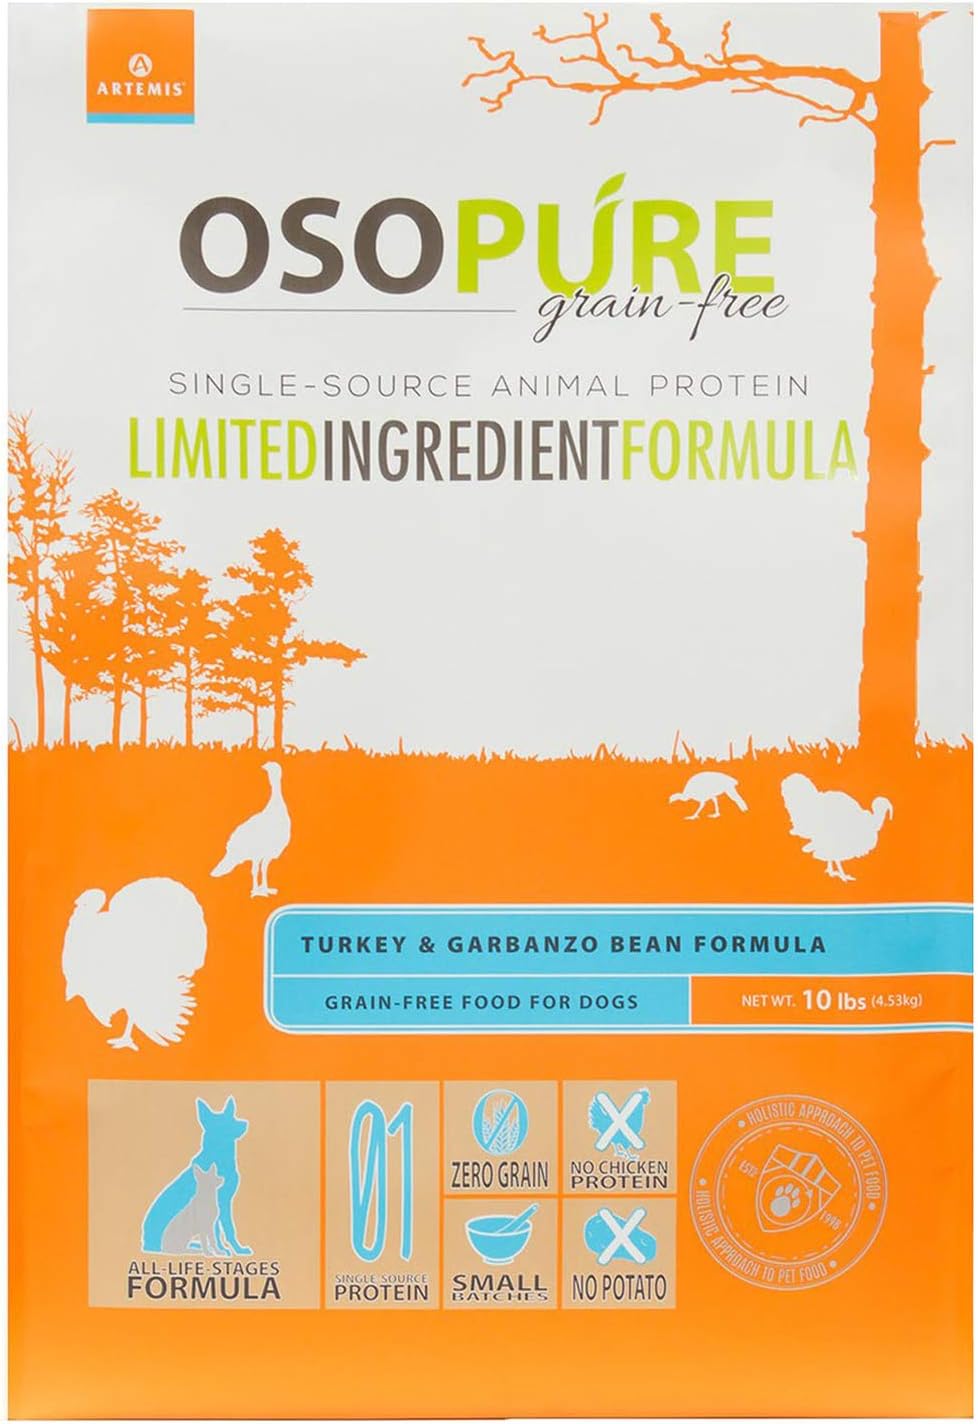 Artemis Osopure Grain-Free Turkey & Garbanzo Bean Dry Dog Food – Gallery Image 1